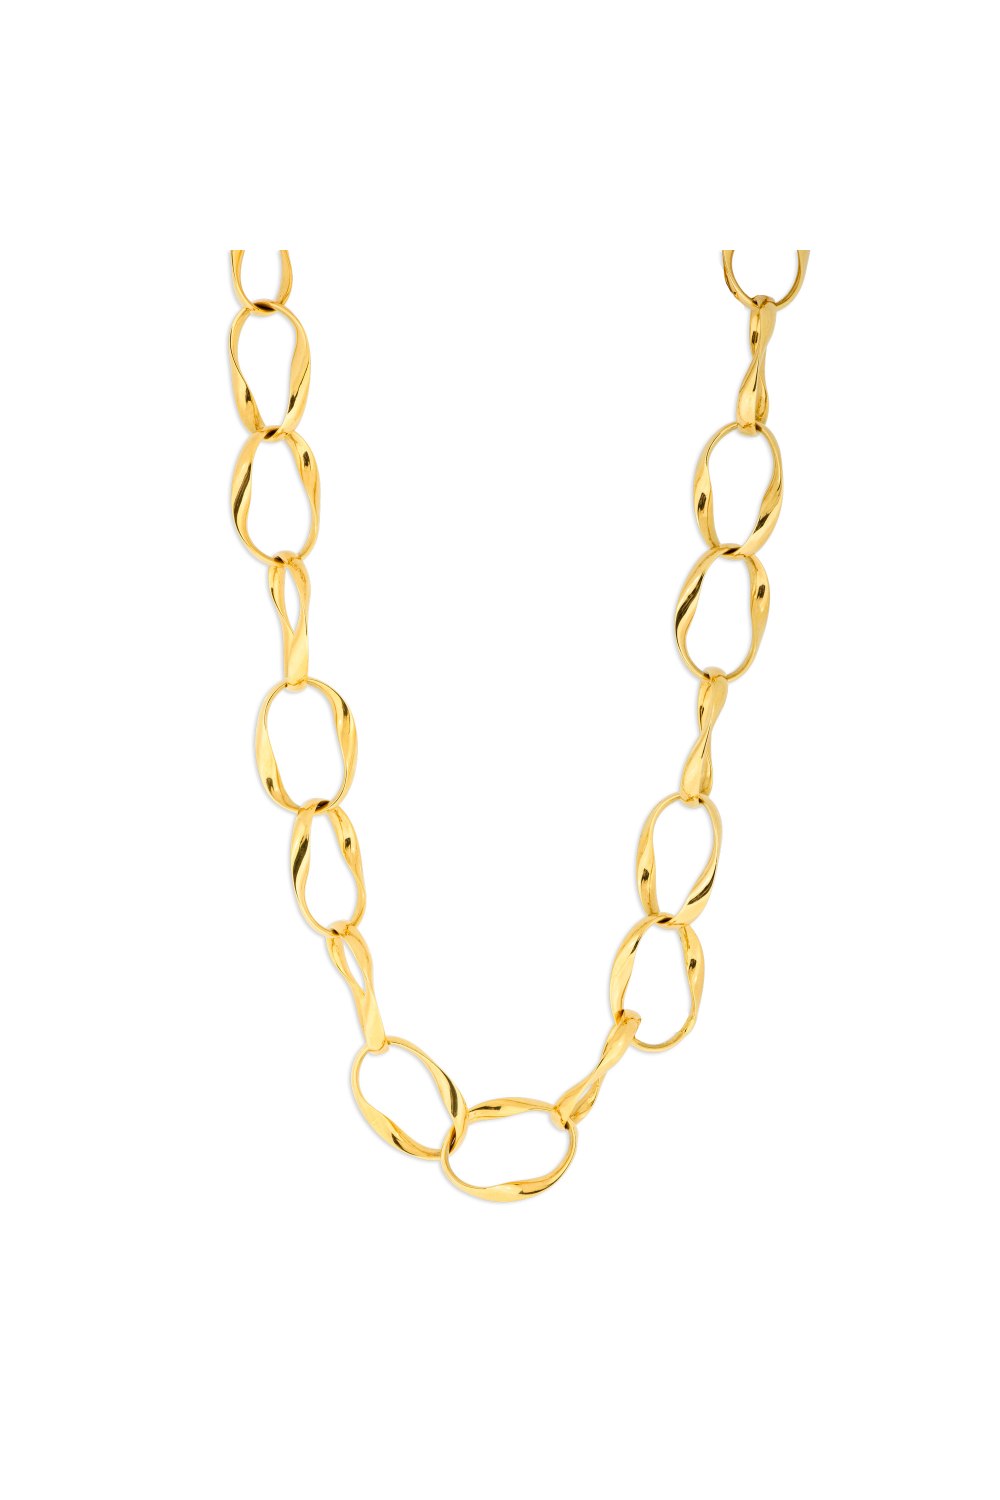 Kessaris-Gold Chain Link Necklace